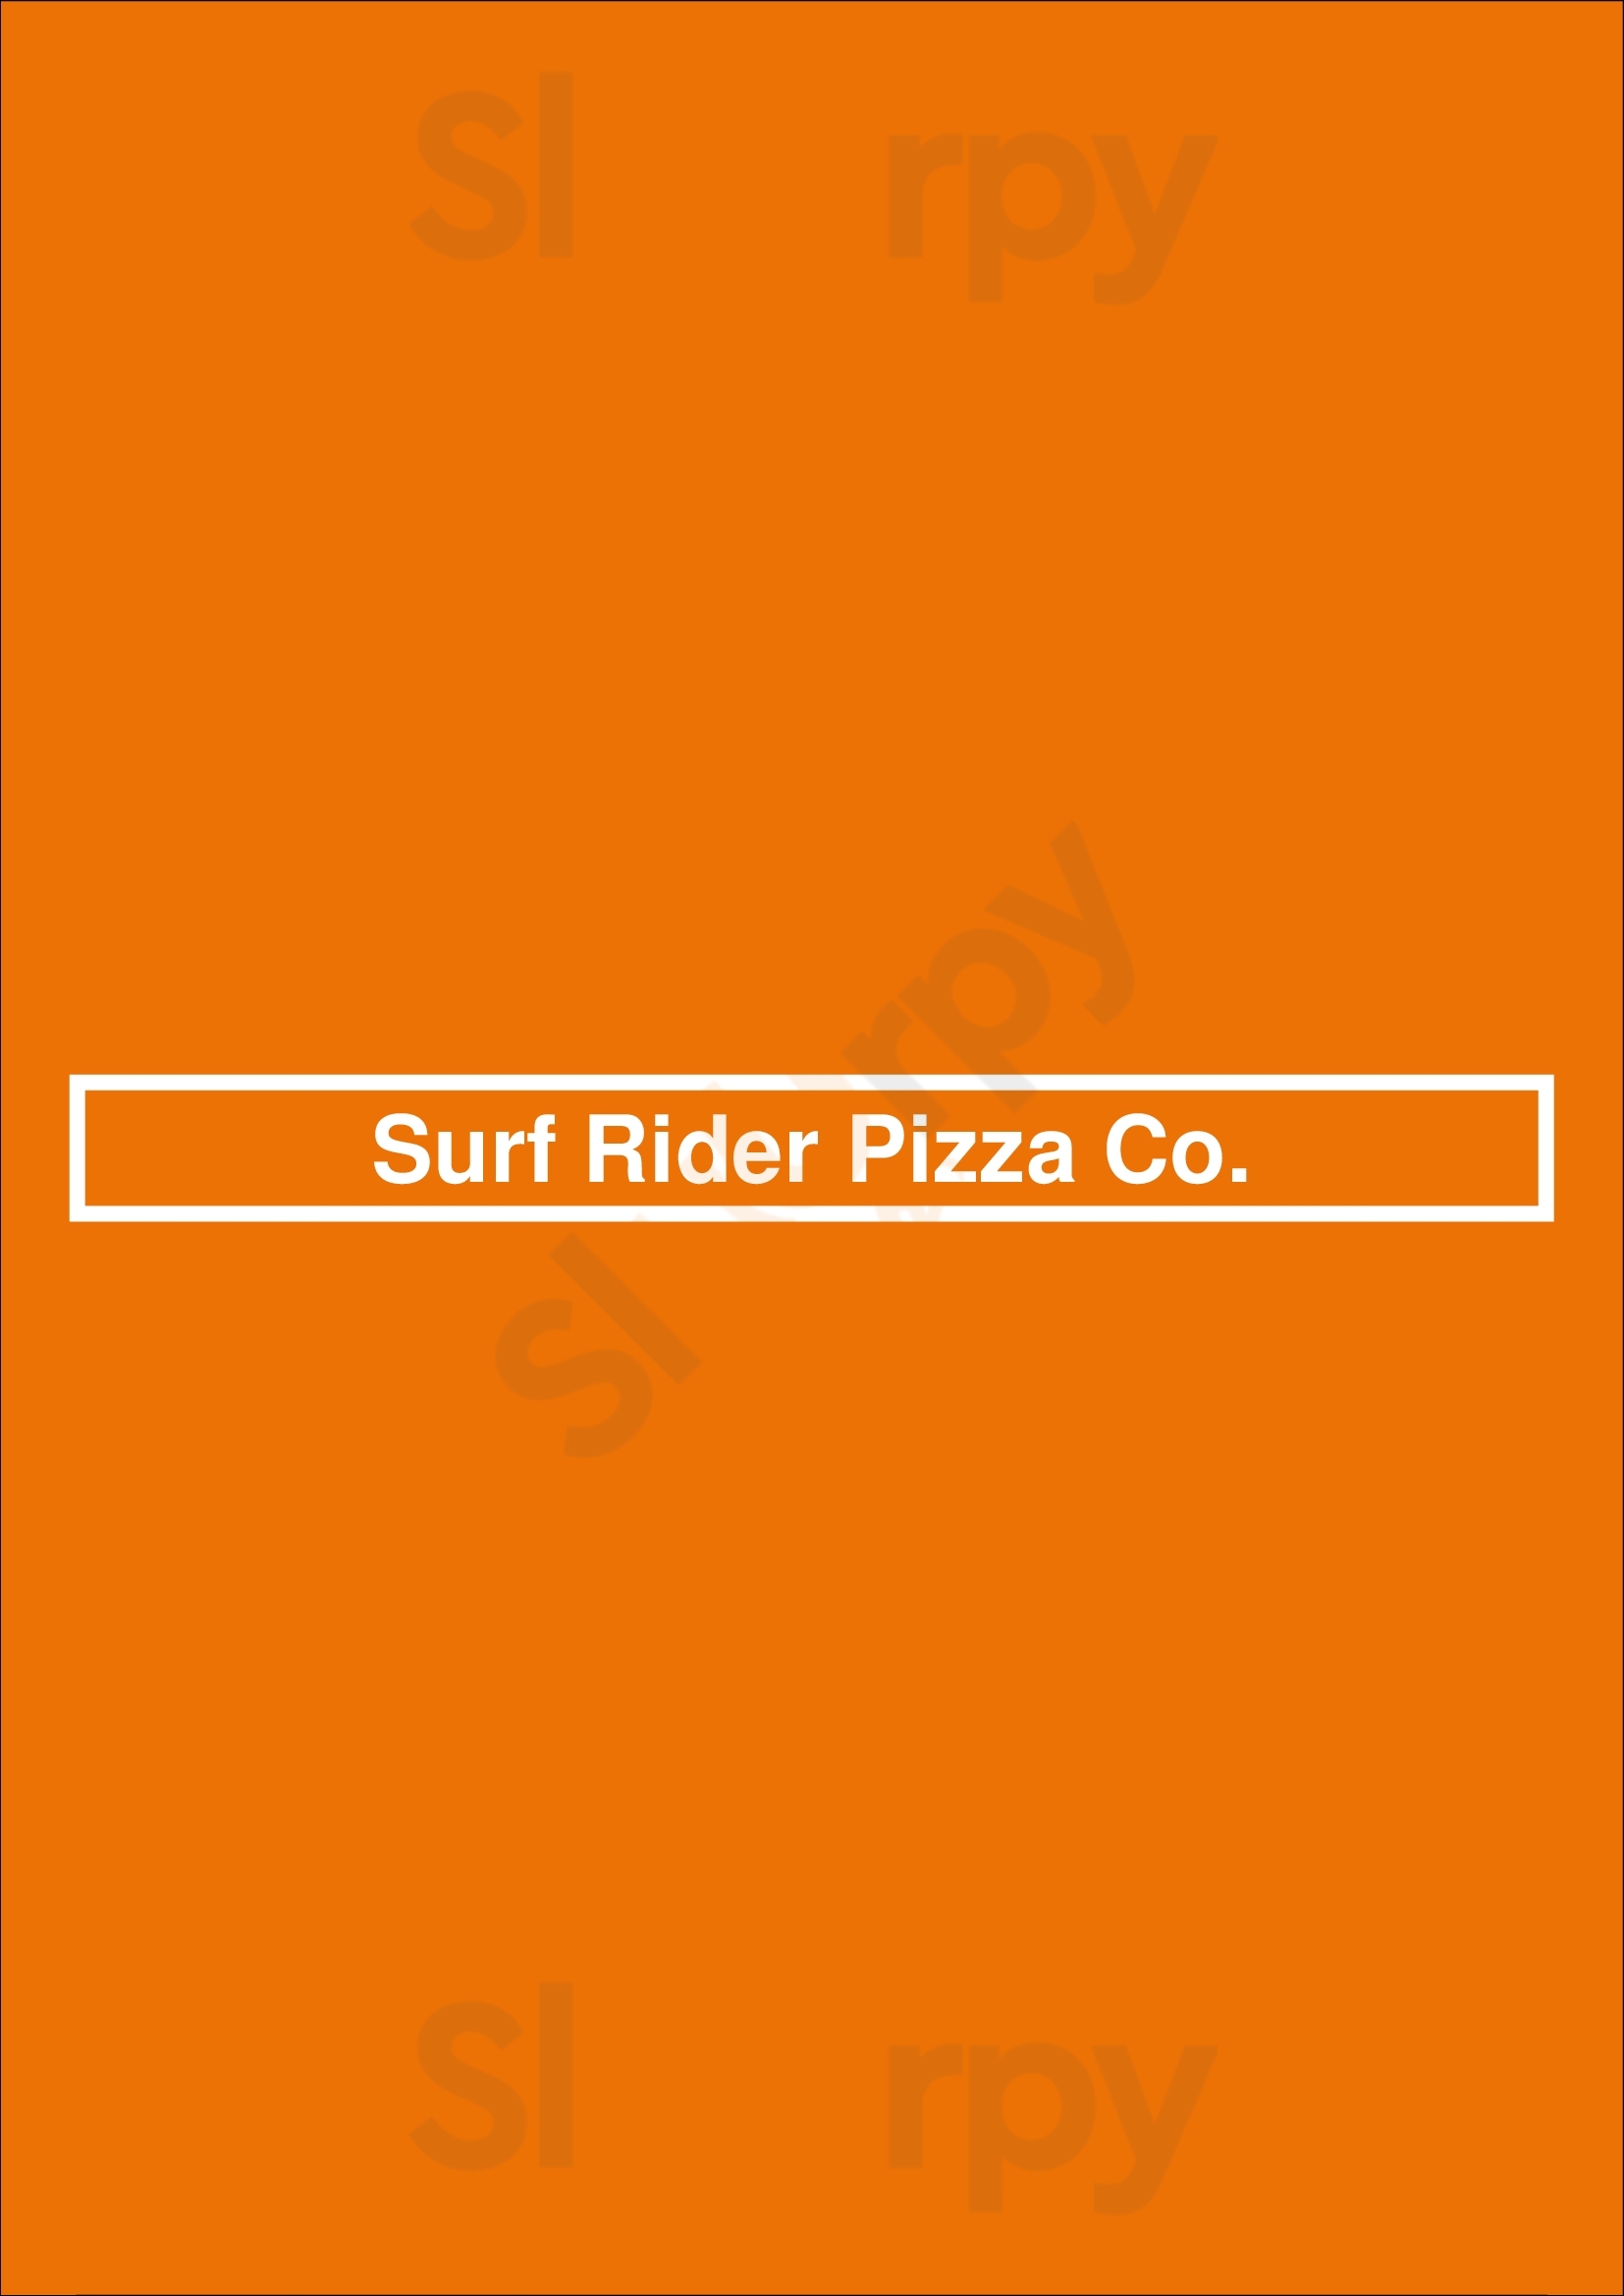 Surf Rider Pizza Co. San Diego Menu - 1